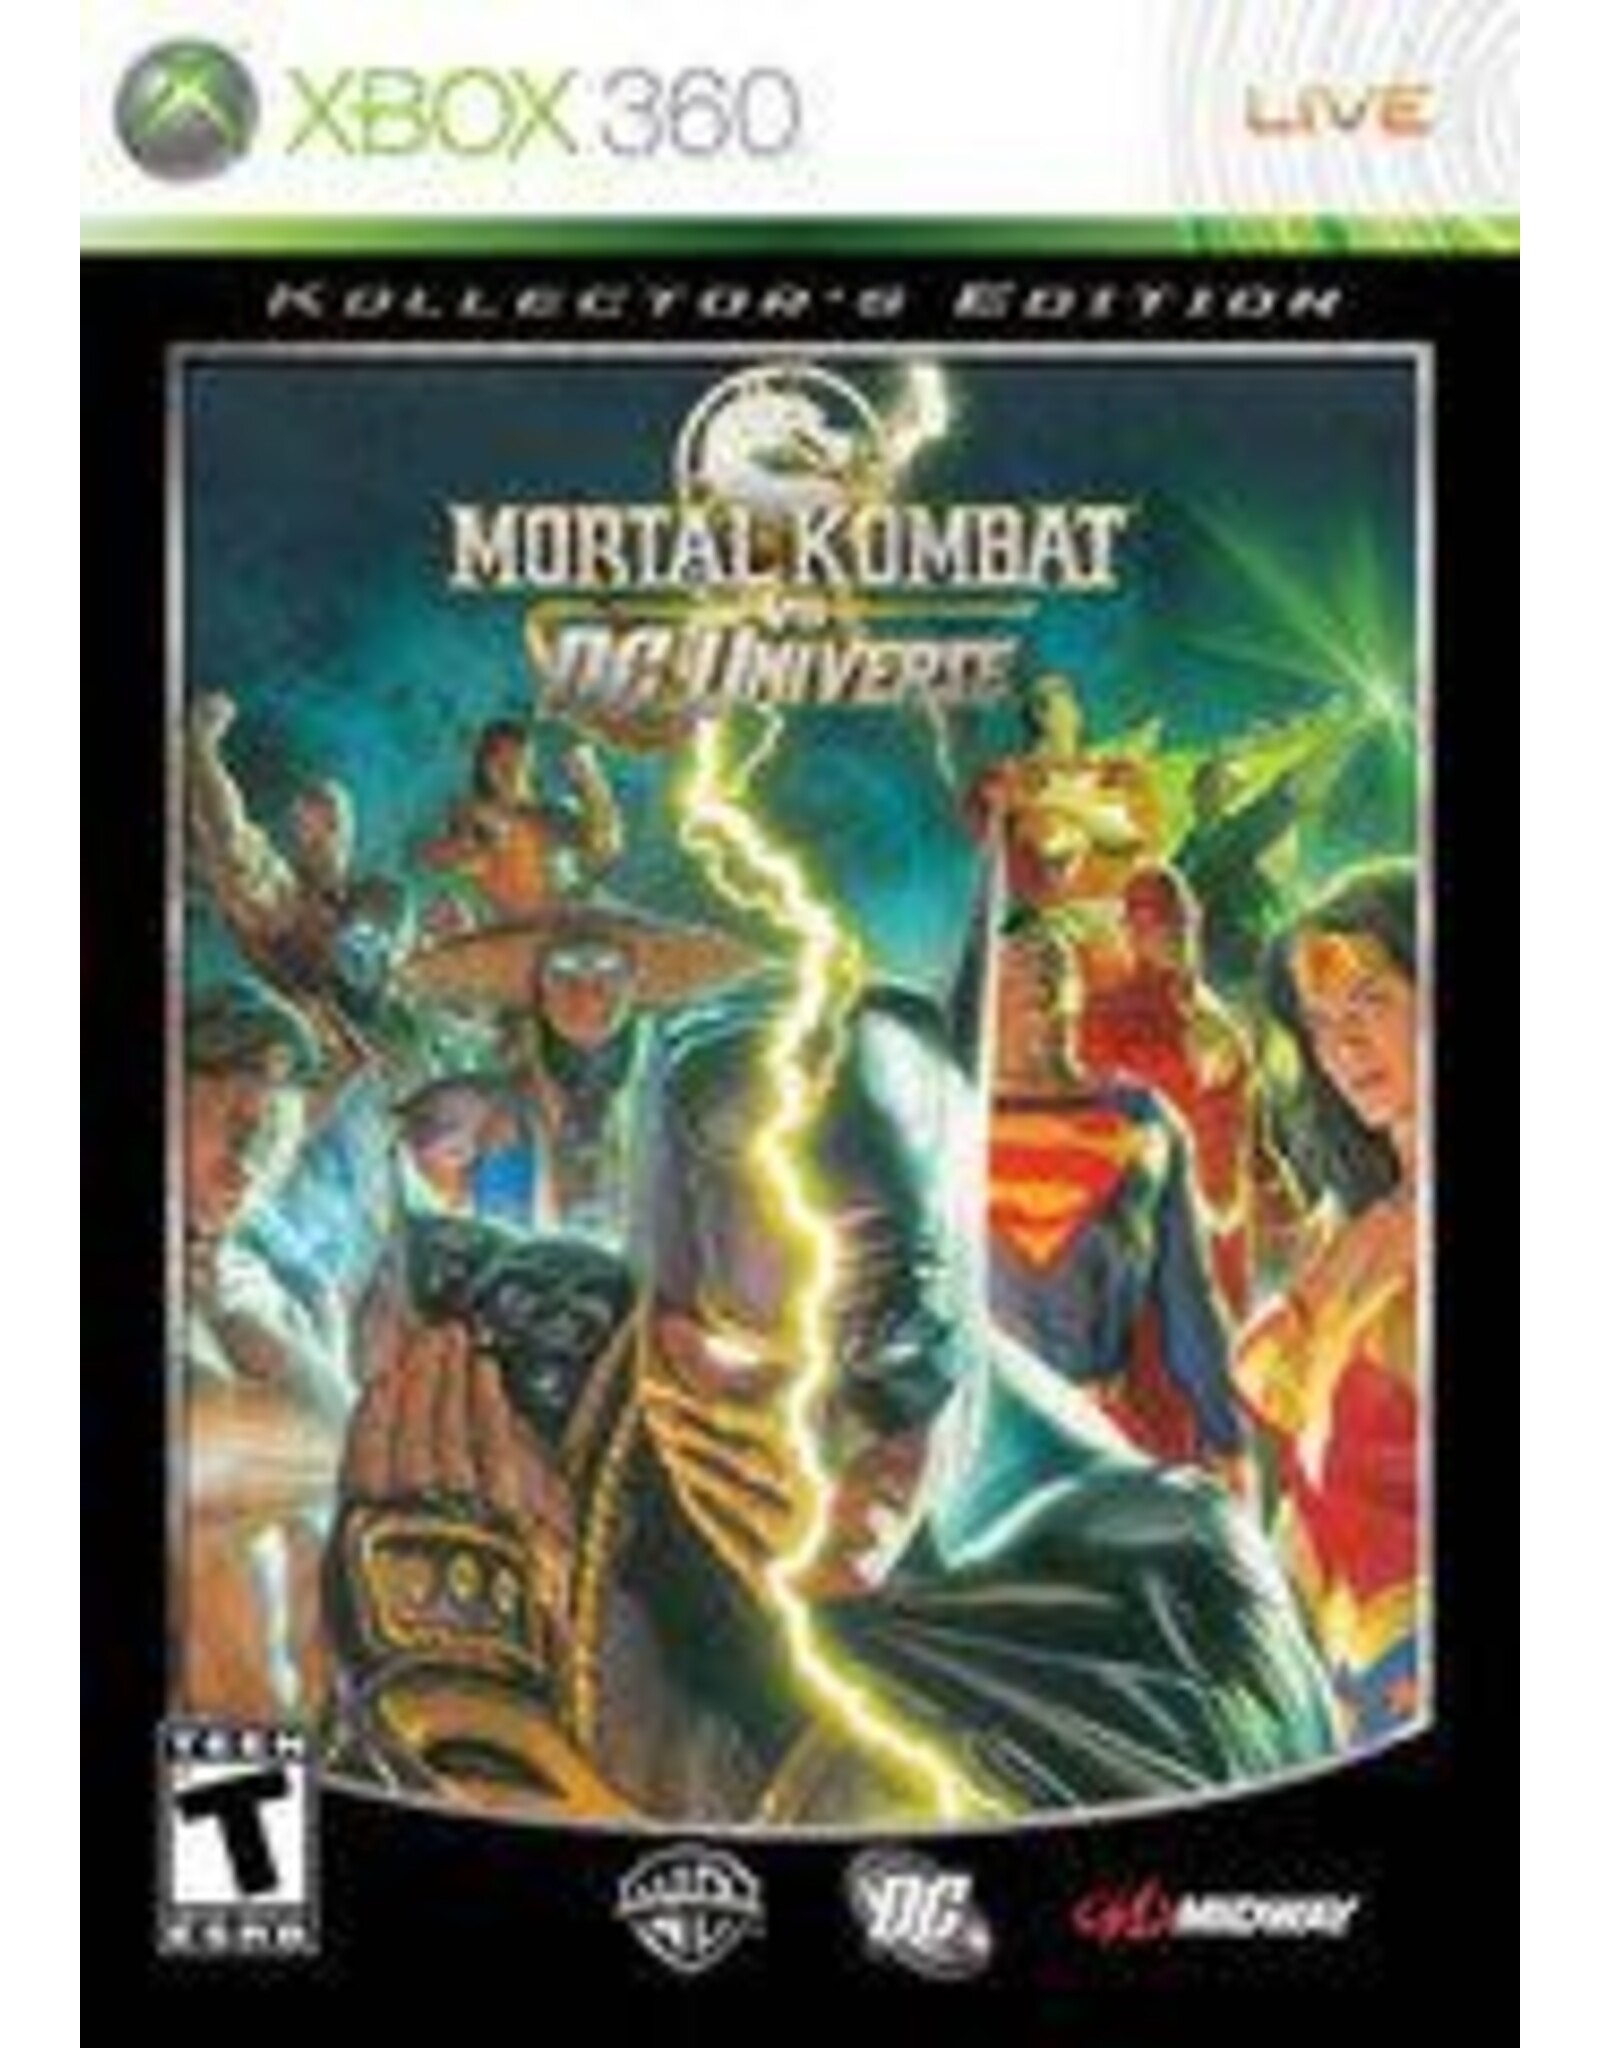 Xbox 360 Mortal Kombat vs. DC Universe Kollector's Edition - No Slipcover (Used, Cosmetic Damage)